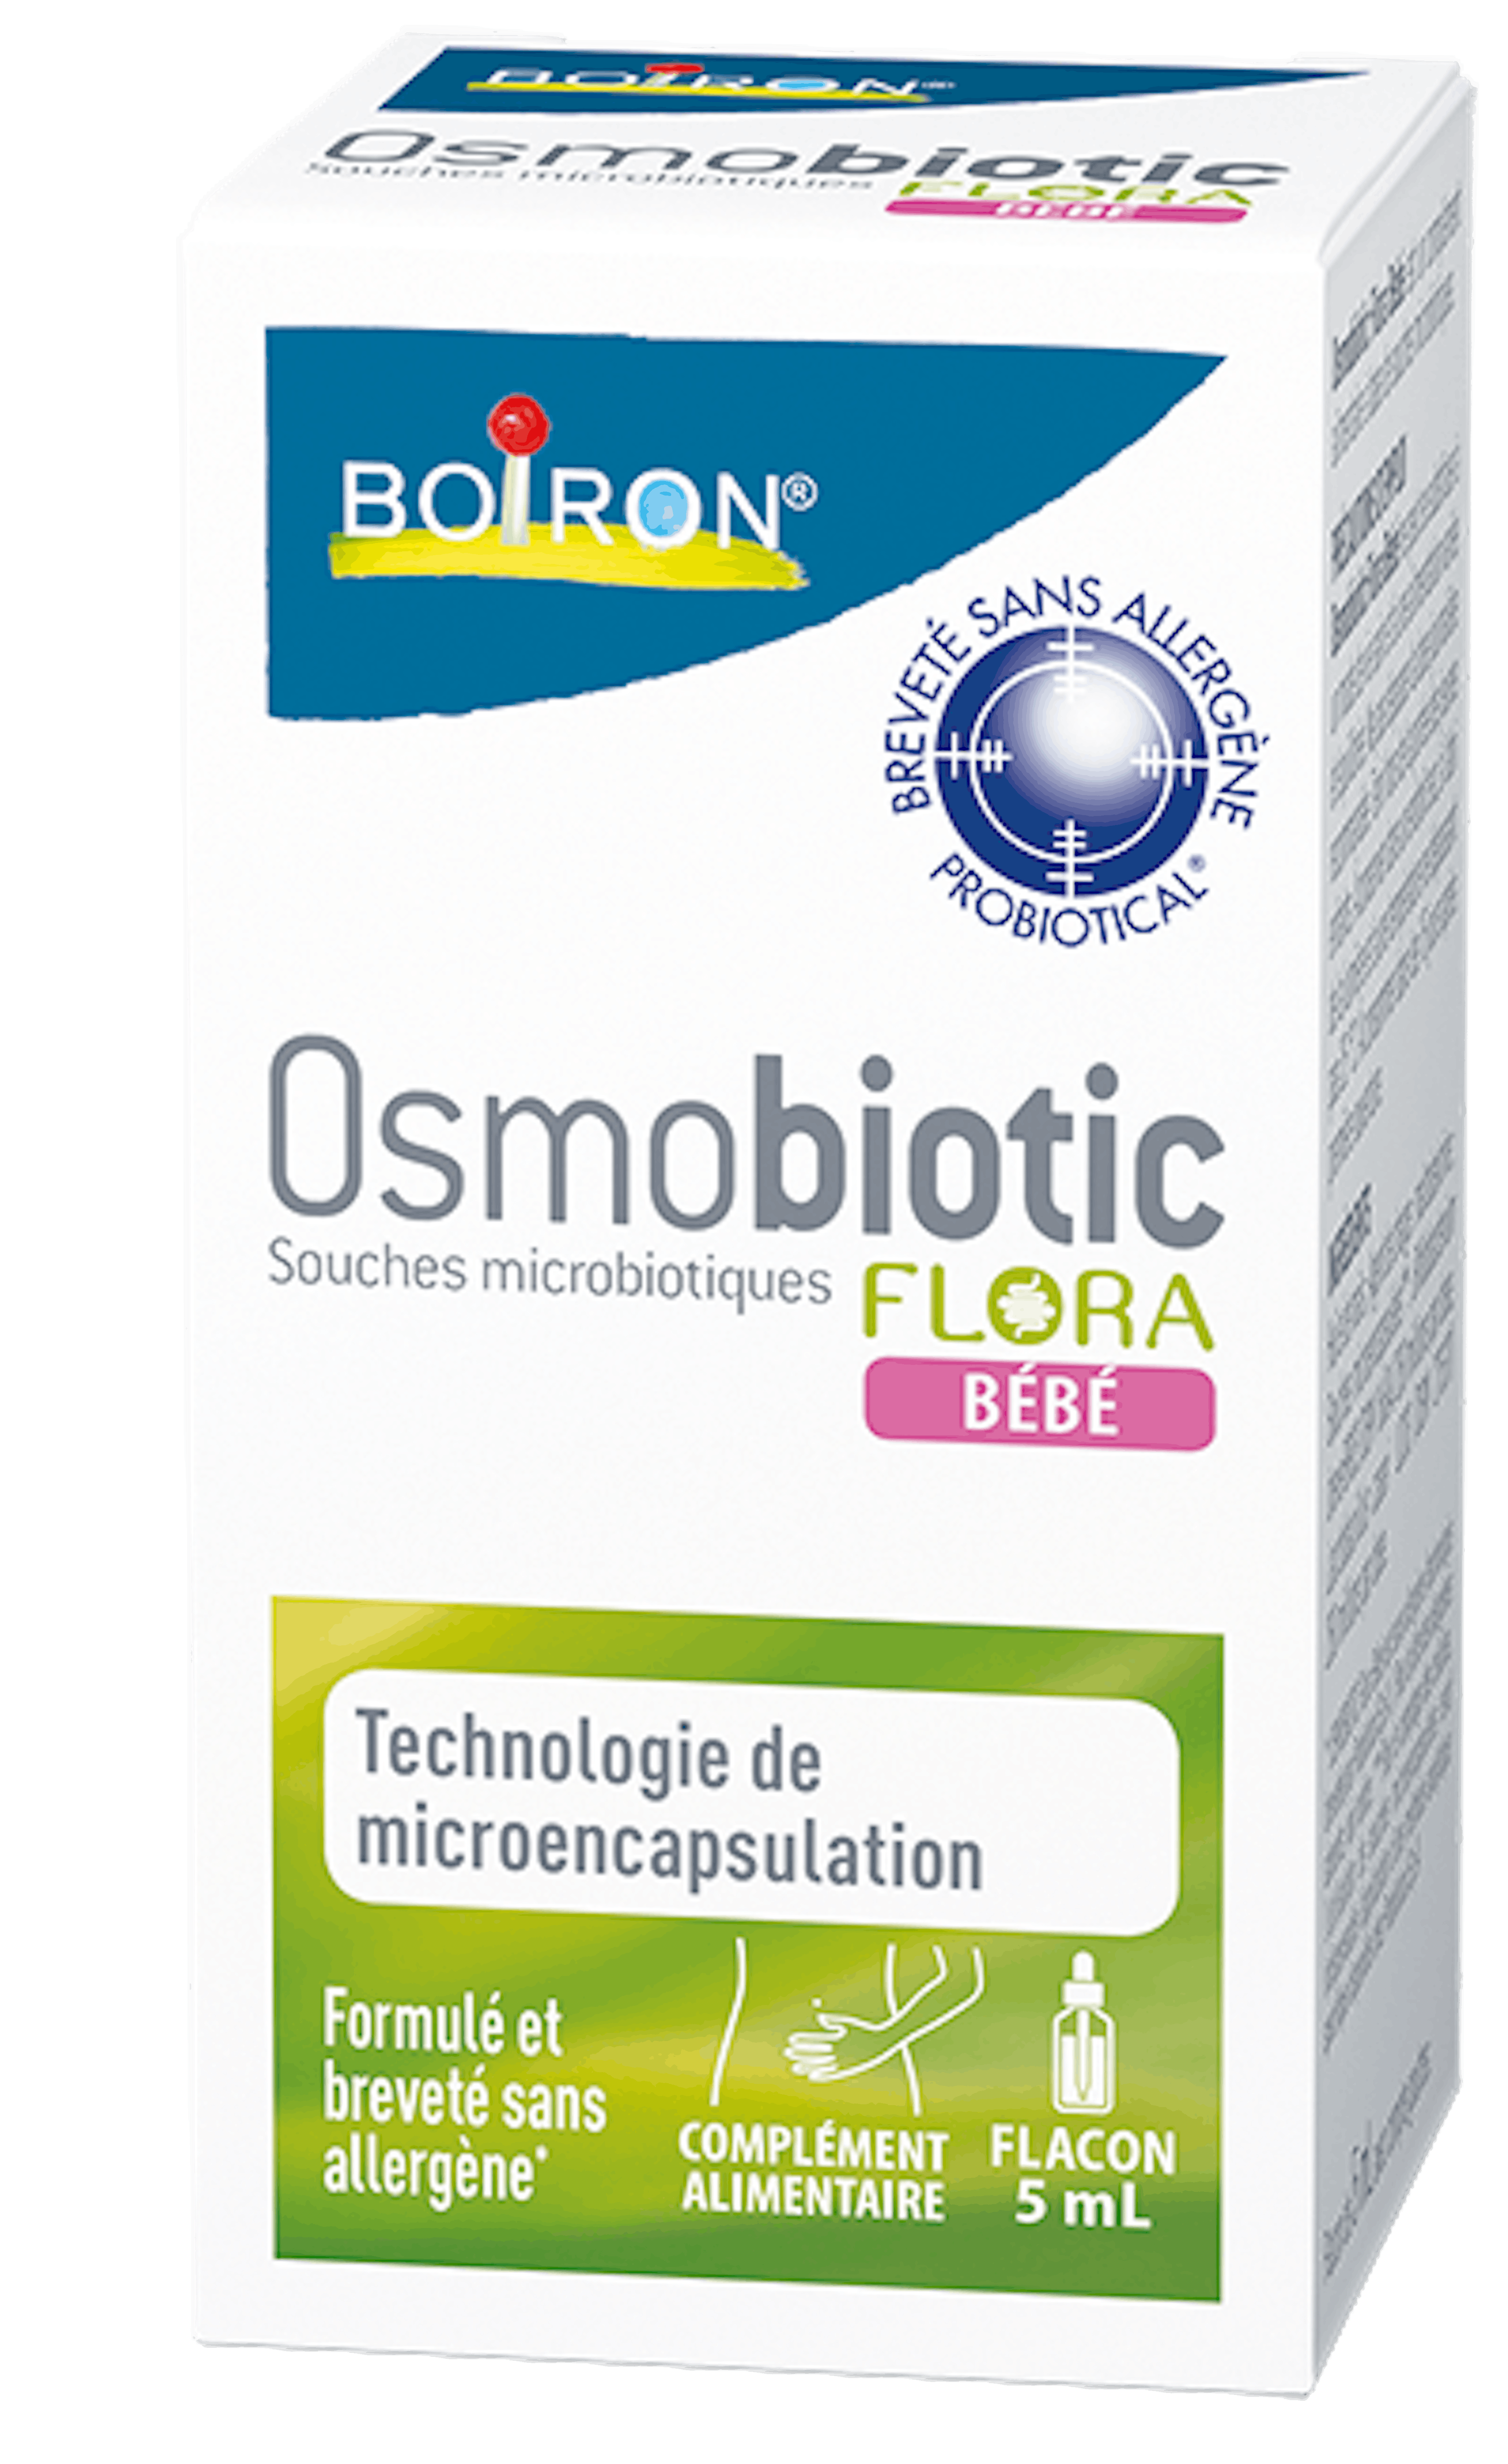 osmobiotic flora bebe boiron